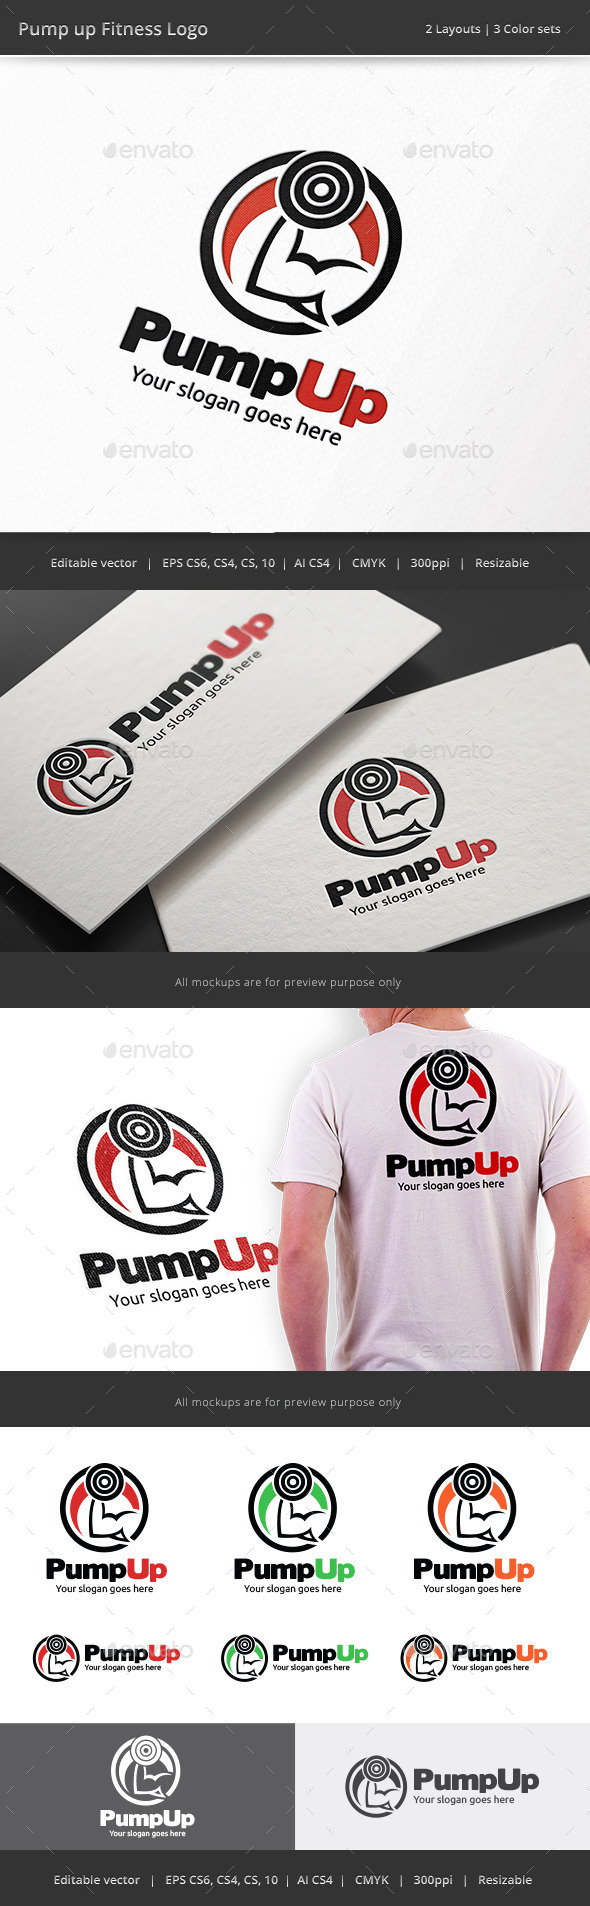 Pump Up Fitness Logo